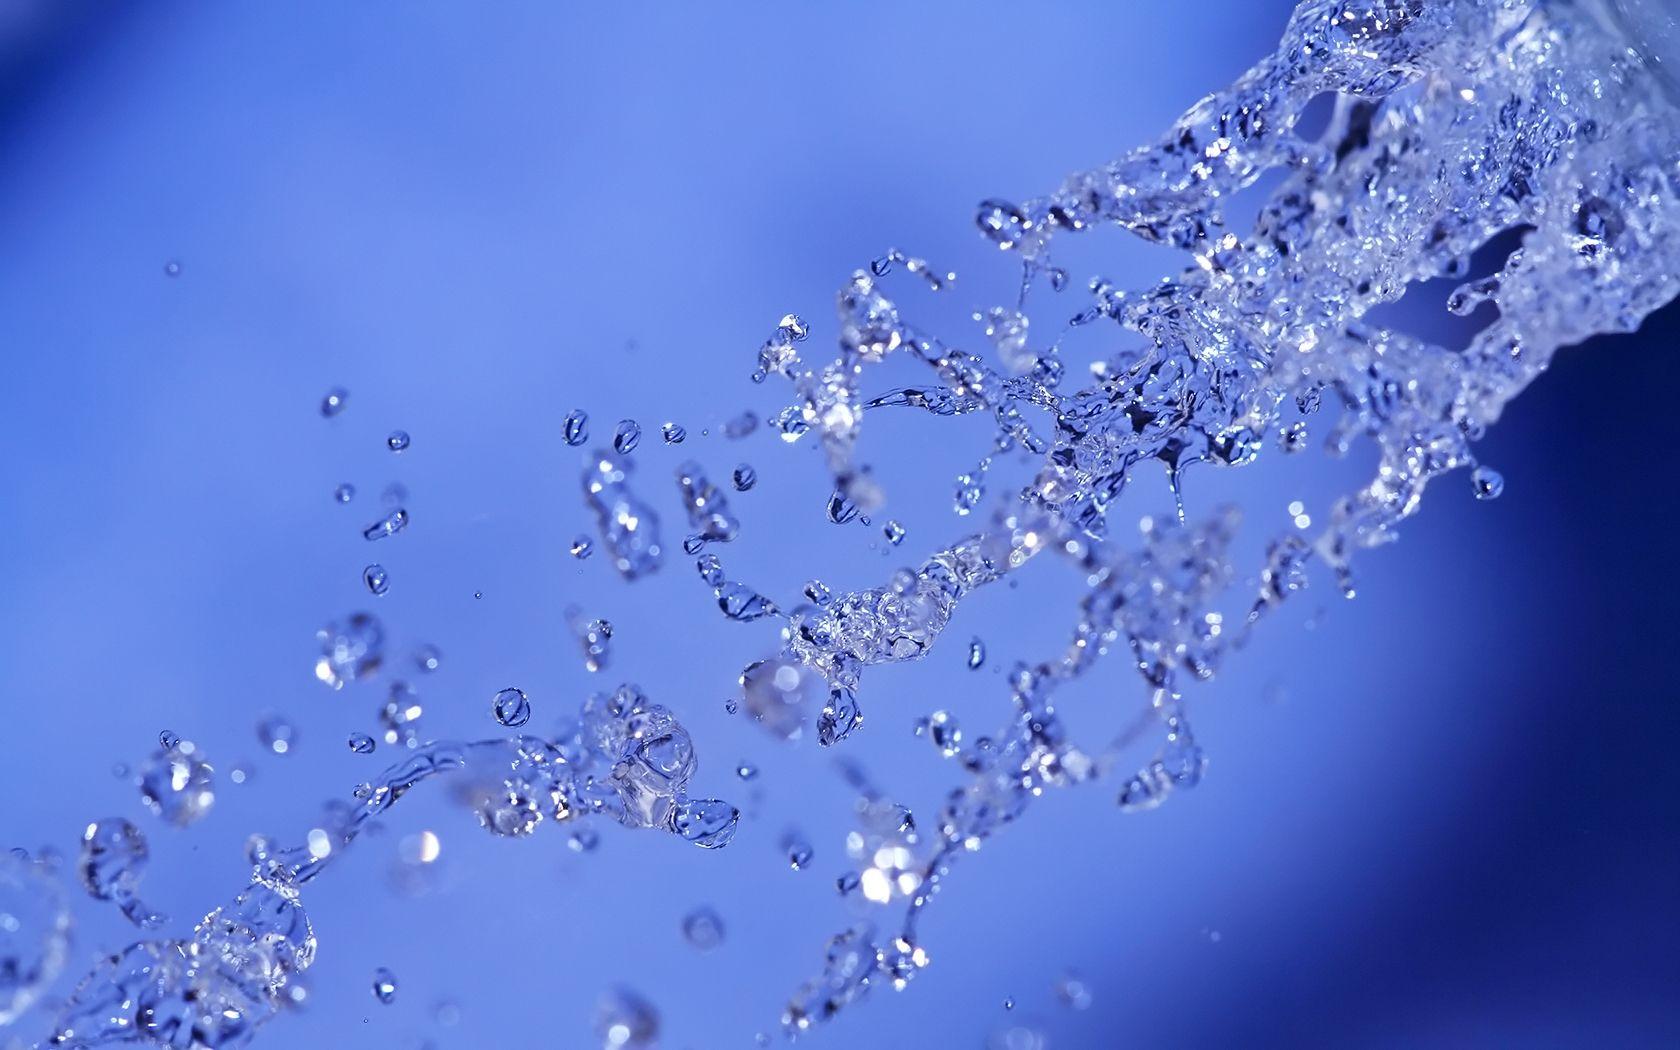 More Beautiful Water Drop HD Wallpaper. FLgrx Graphics